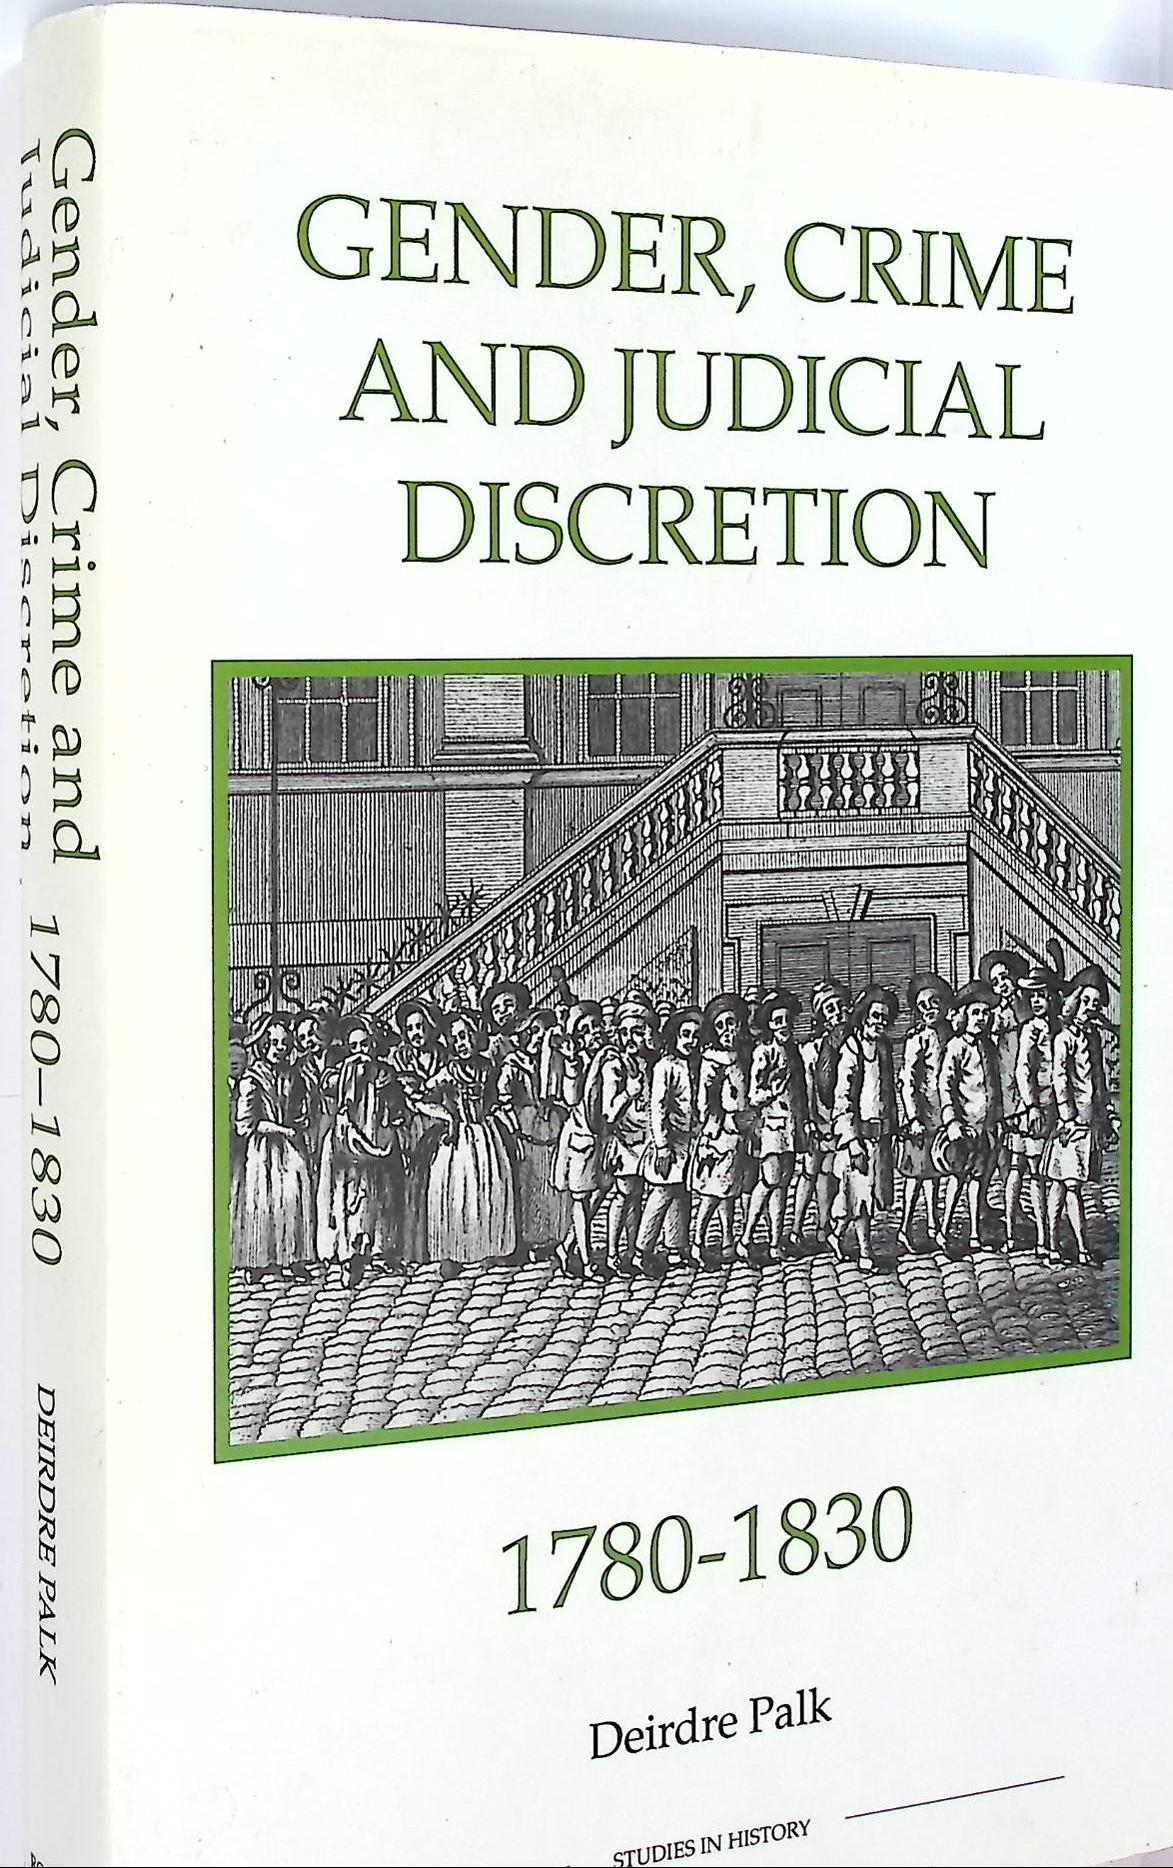 Gender, Crime and Judicial Discretion 1780-1830.